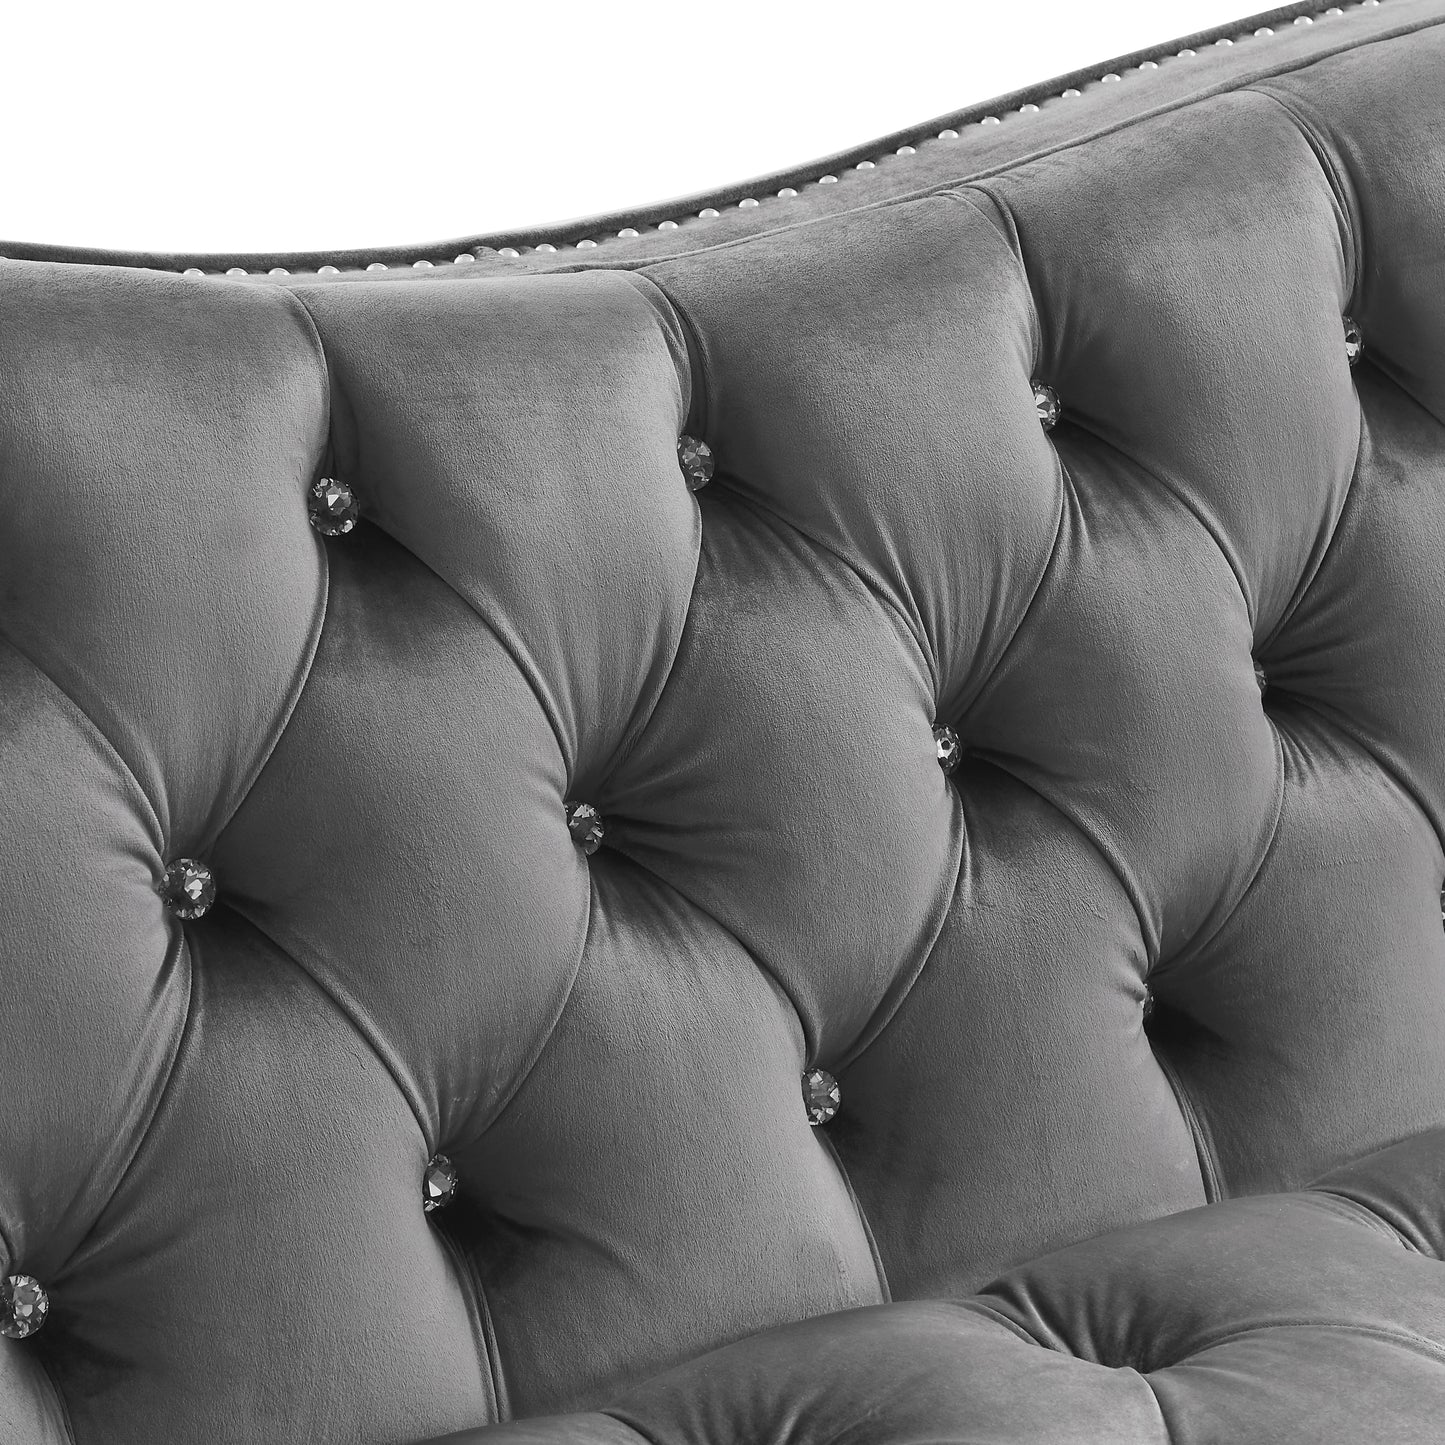 Grey Light Luxury Crystal Feet Tufted 2P Sofa - Enova Luxe Home Store